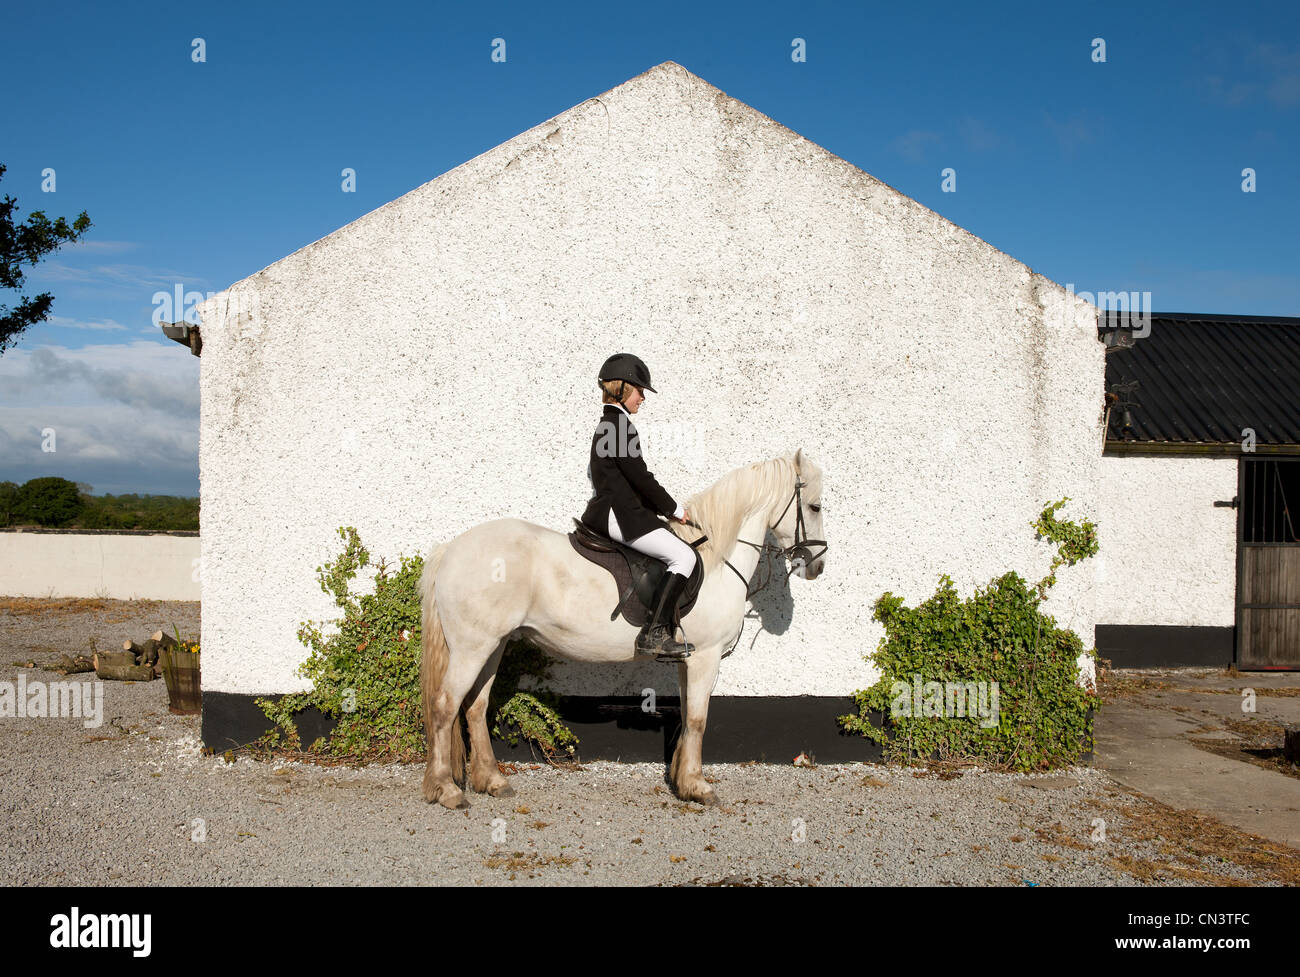 Boy riding horse in paddock Stock Photo